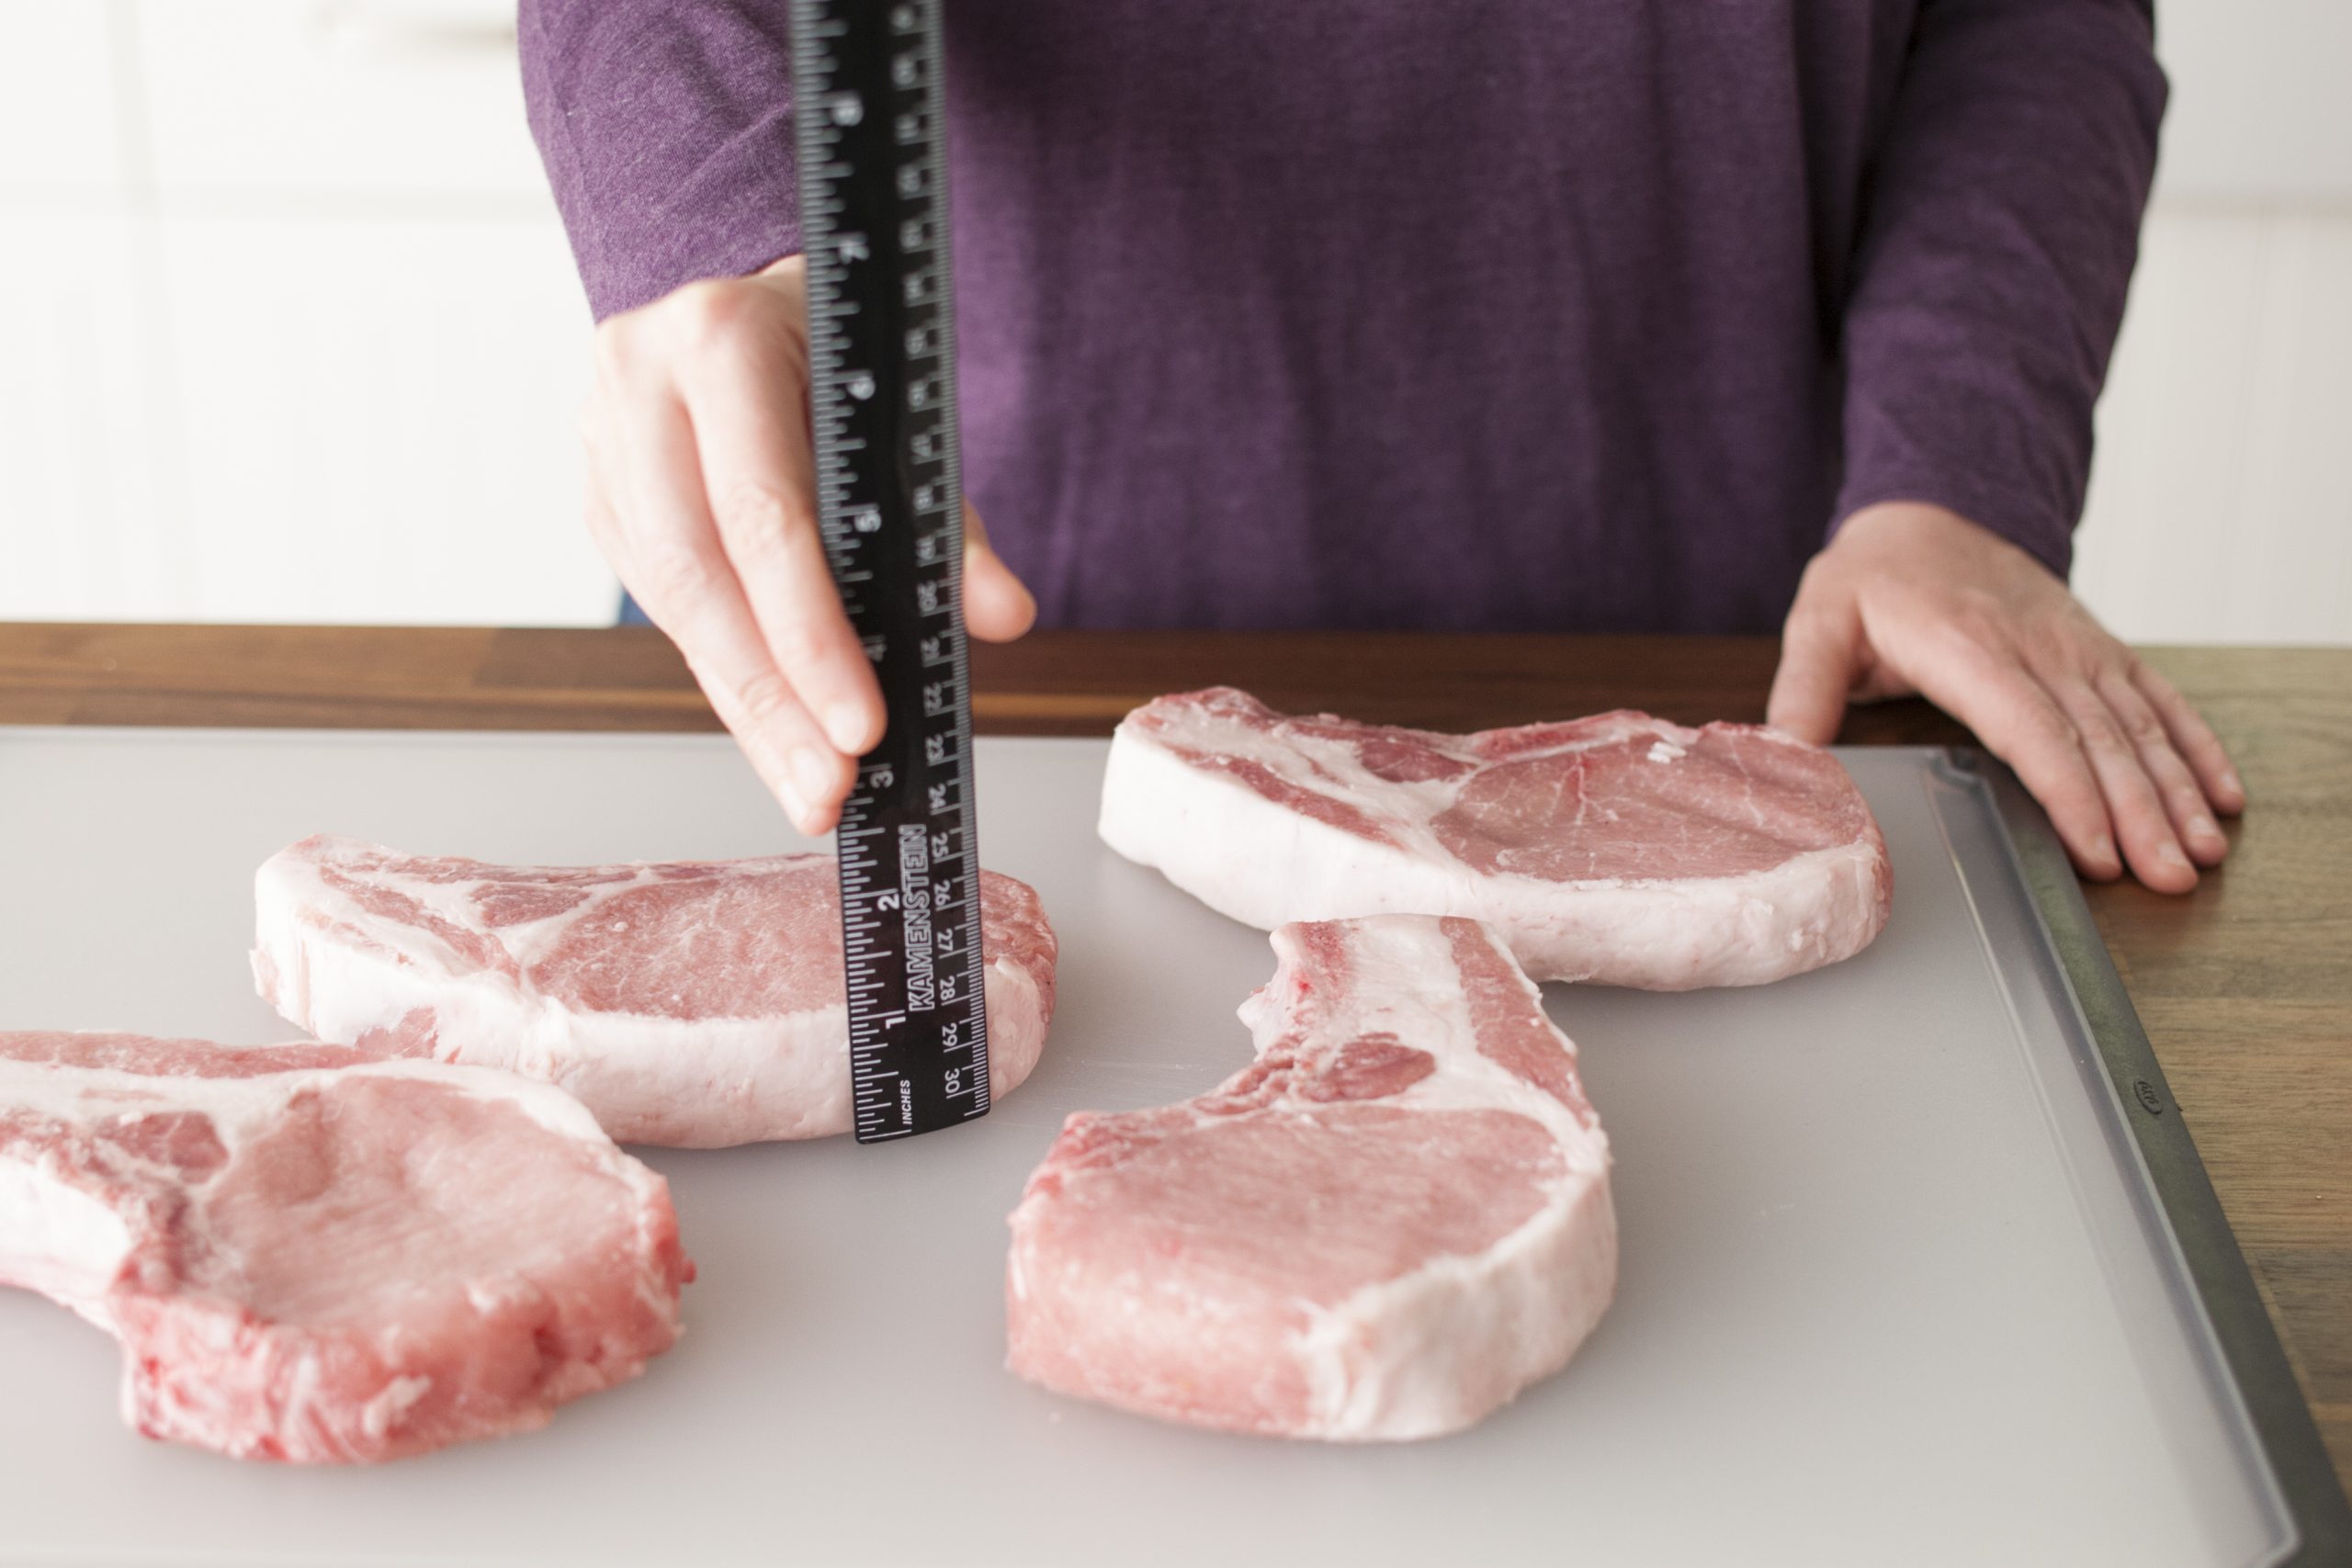 measuring pork chops